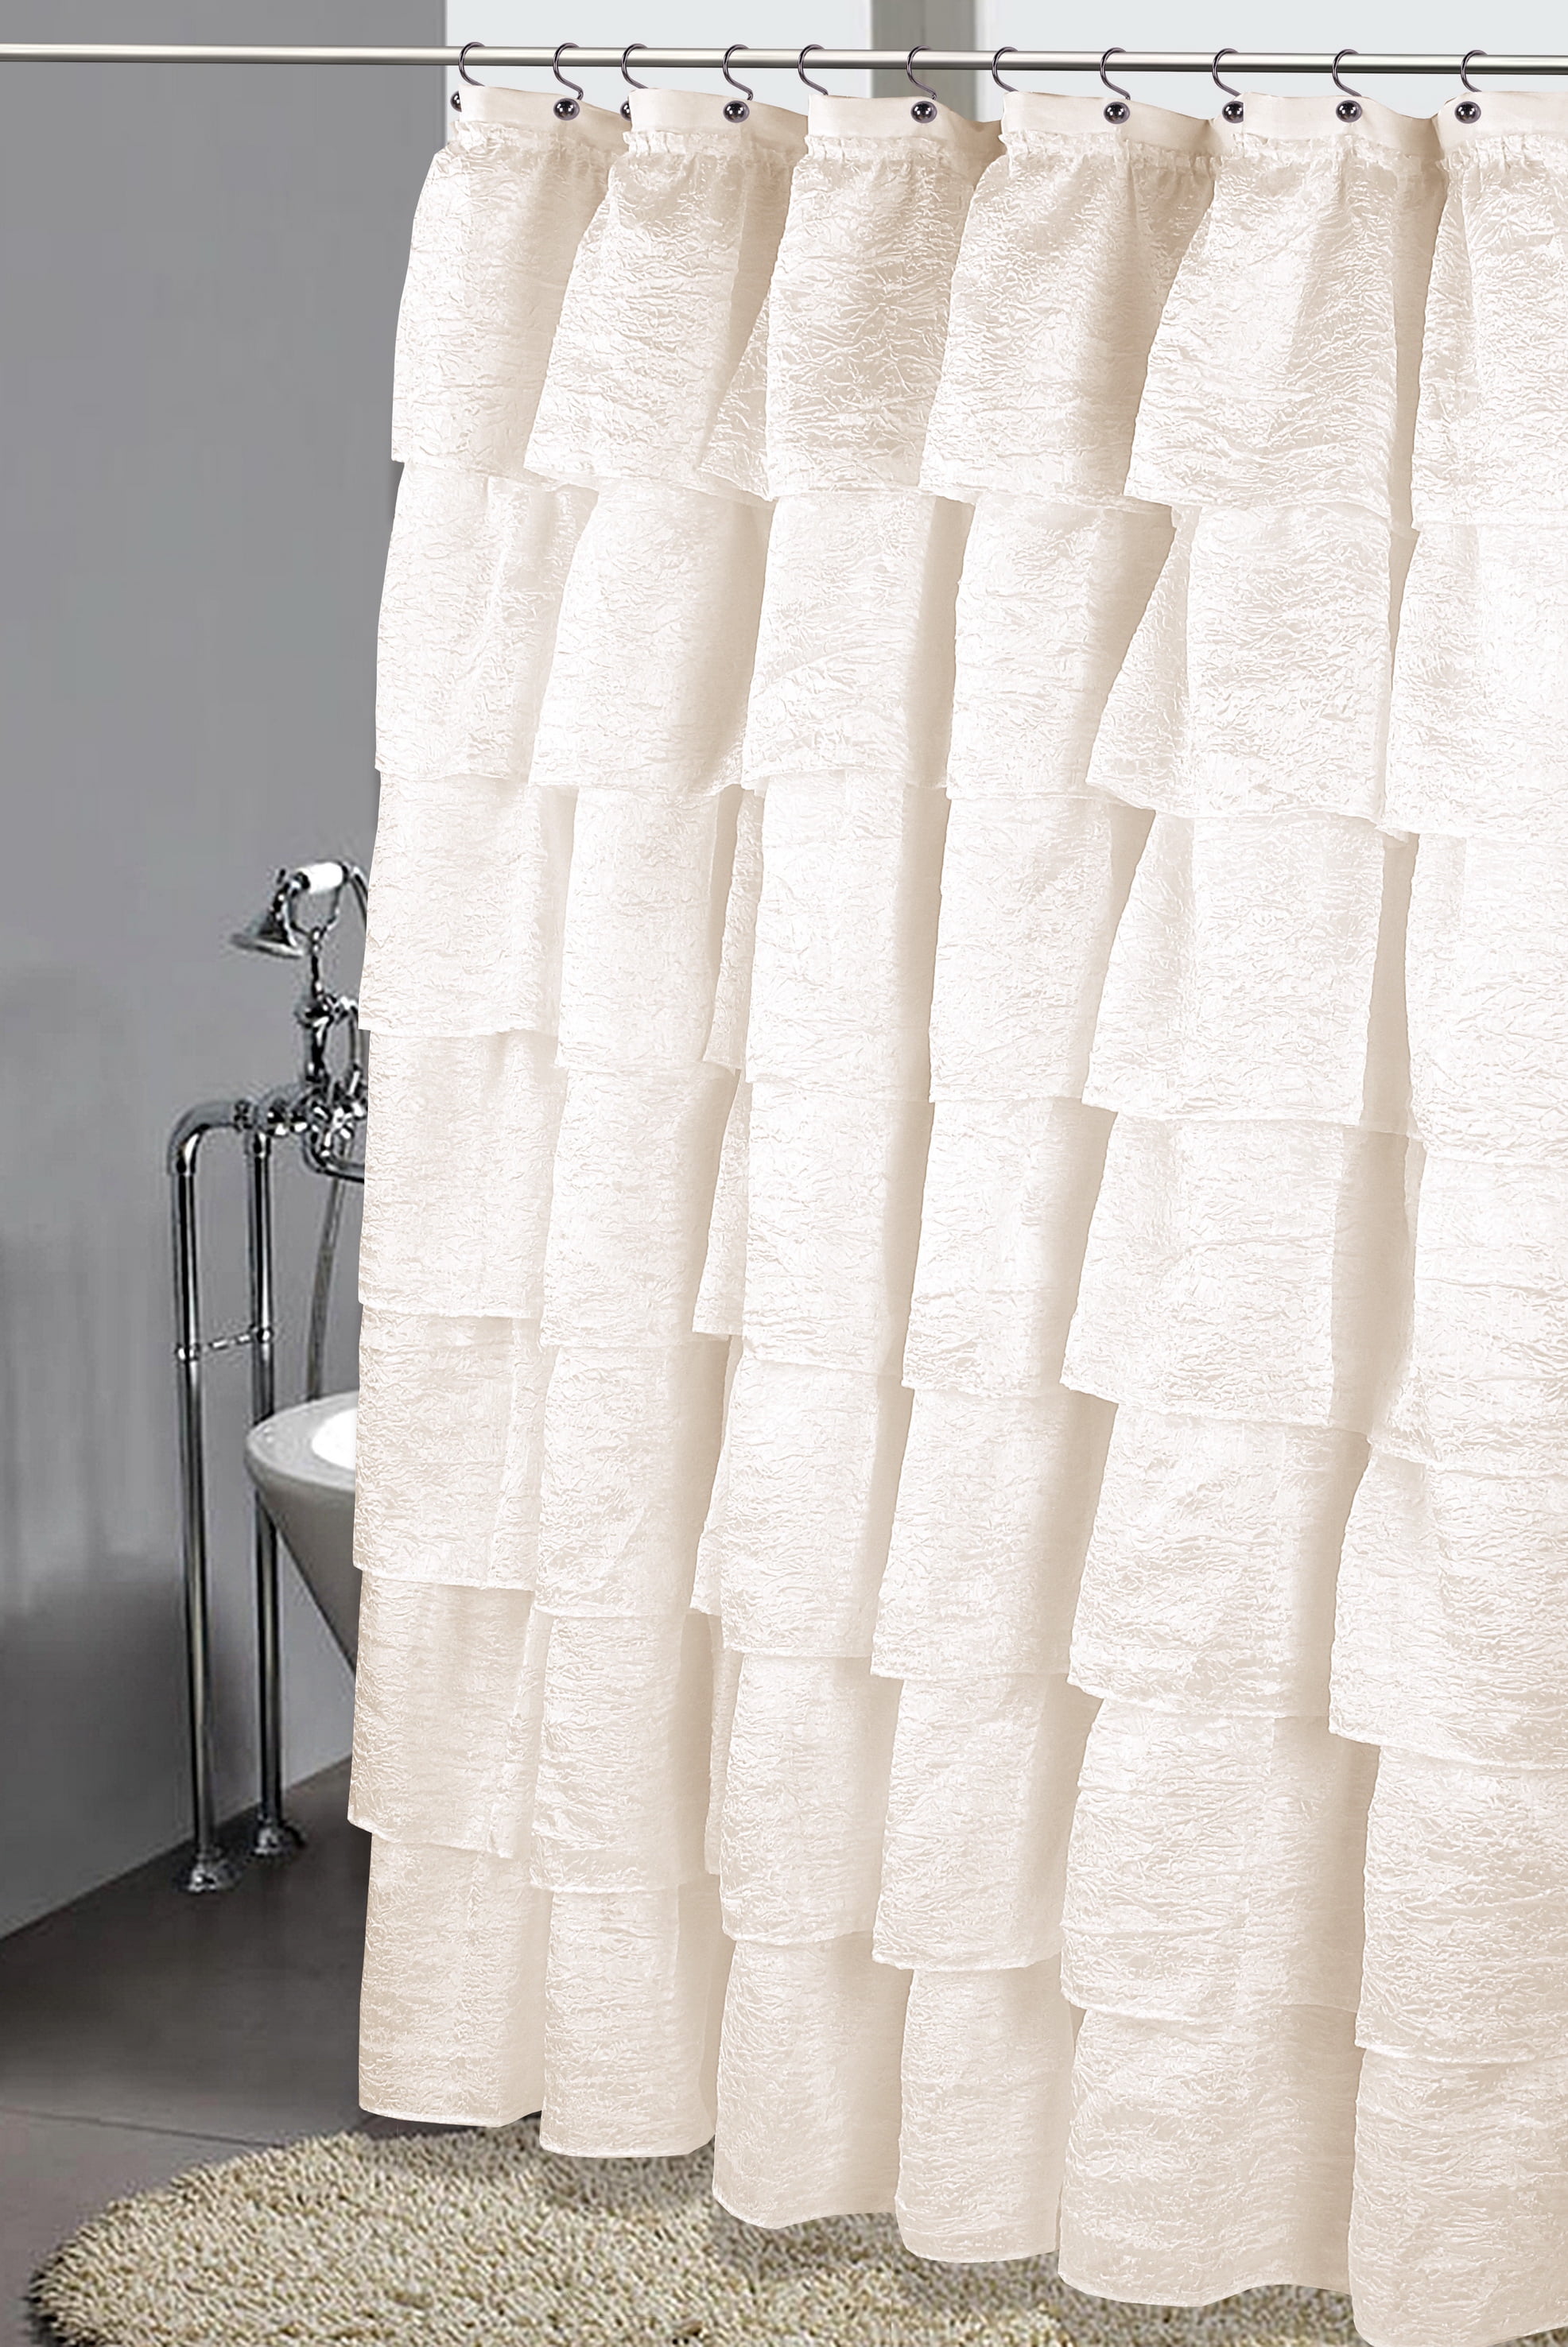 1 Piece Gypsy Ruffle Crushed Sheer Shabby Chic Bathroom Fabric Shower Curtain 